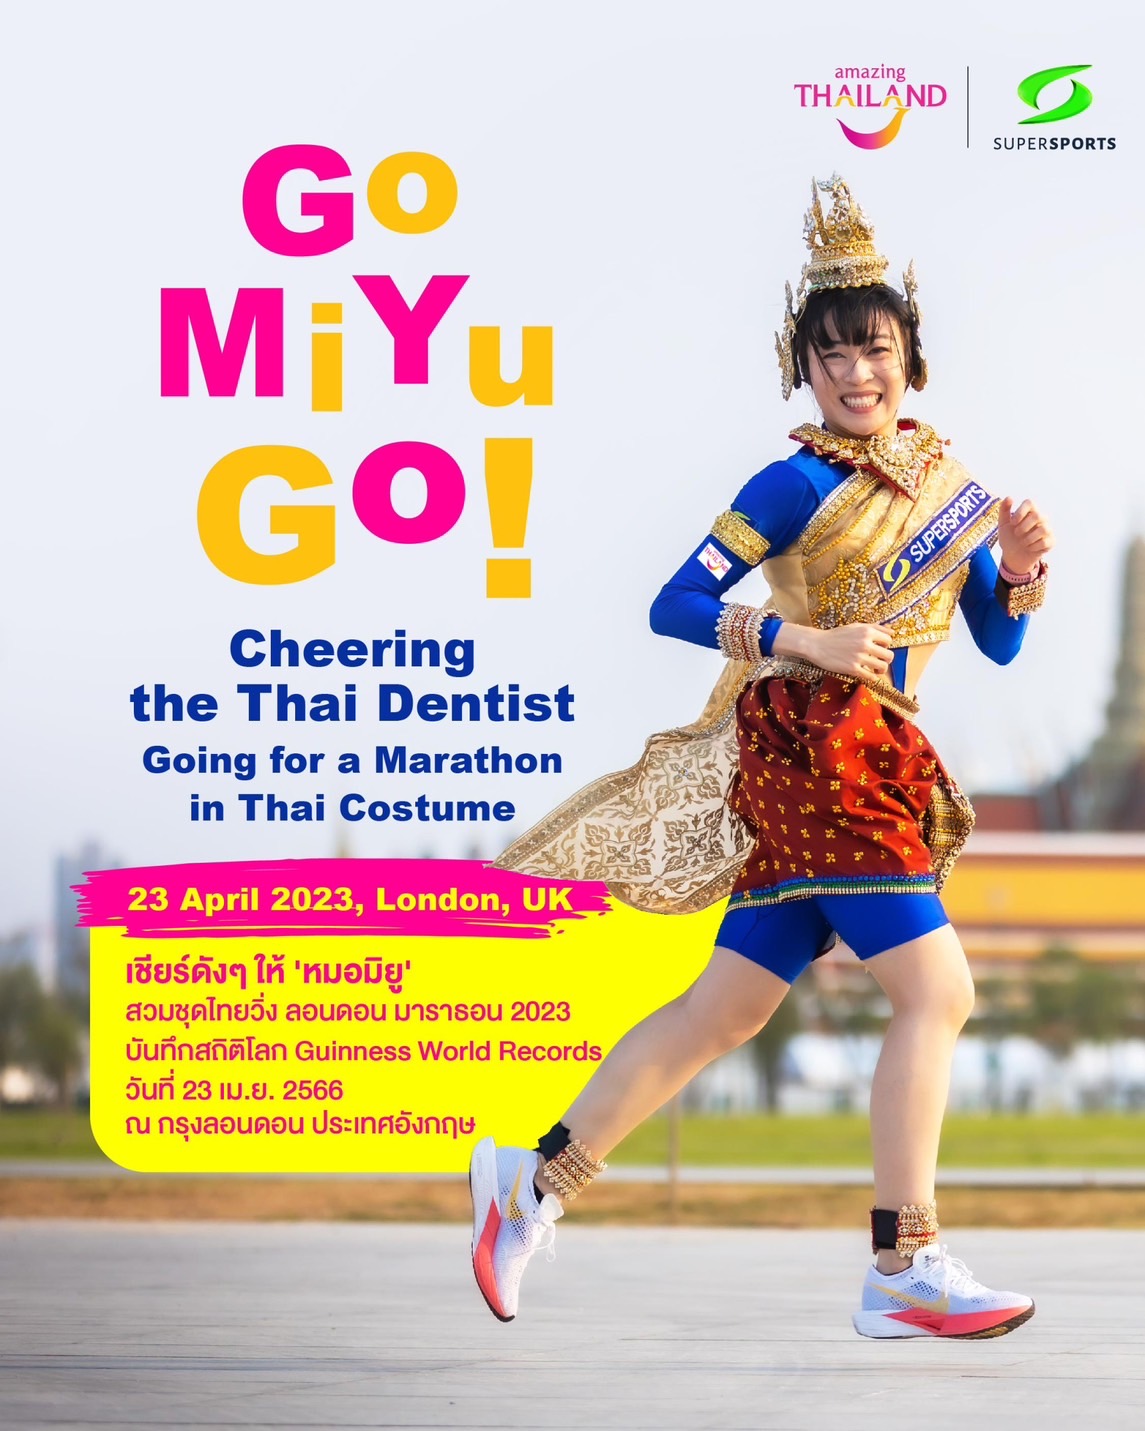 Cheering the Thai dentist going for a marathon in Thai costume